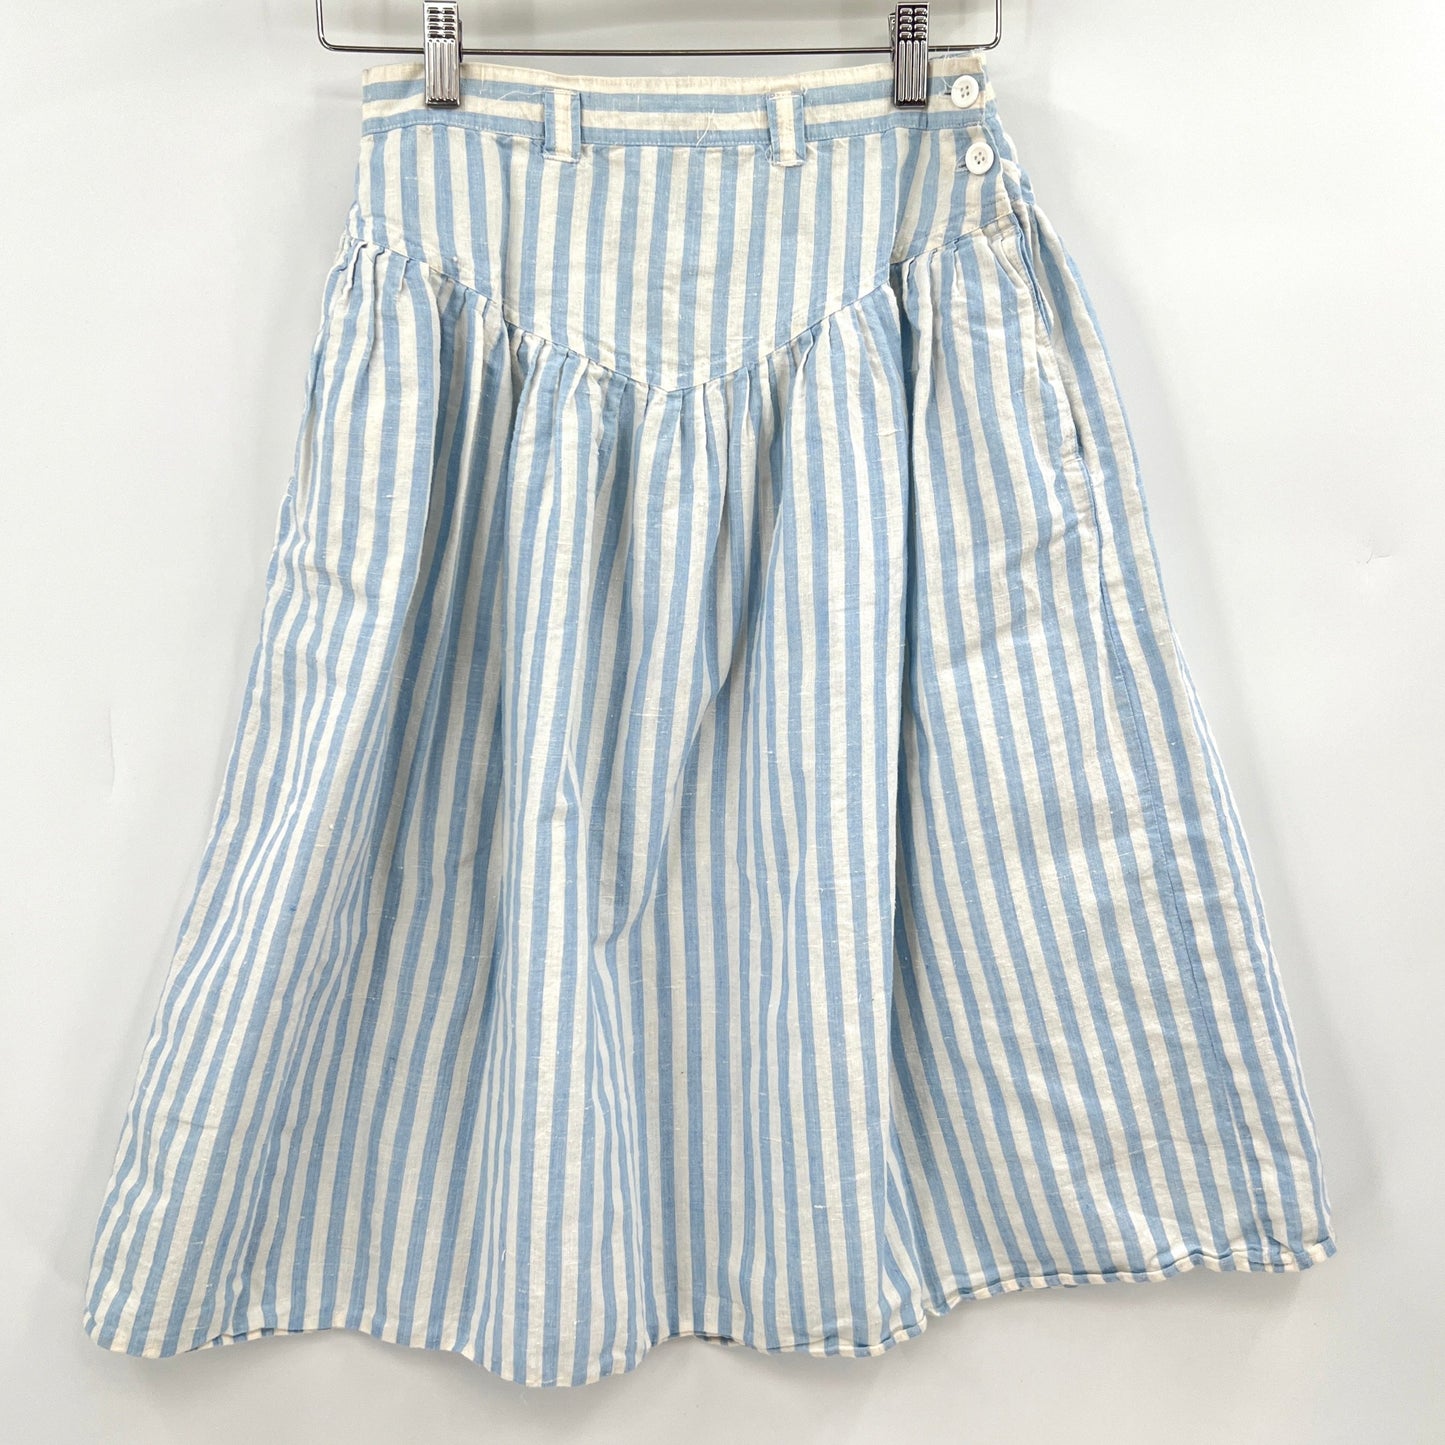 Vintage Ramie Cotton Blend High Waisted Skirt